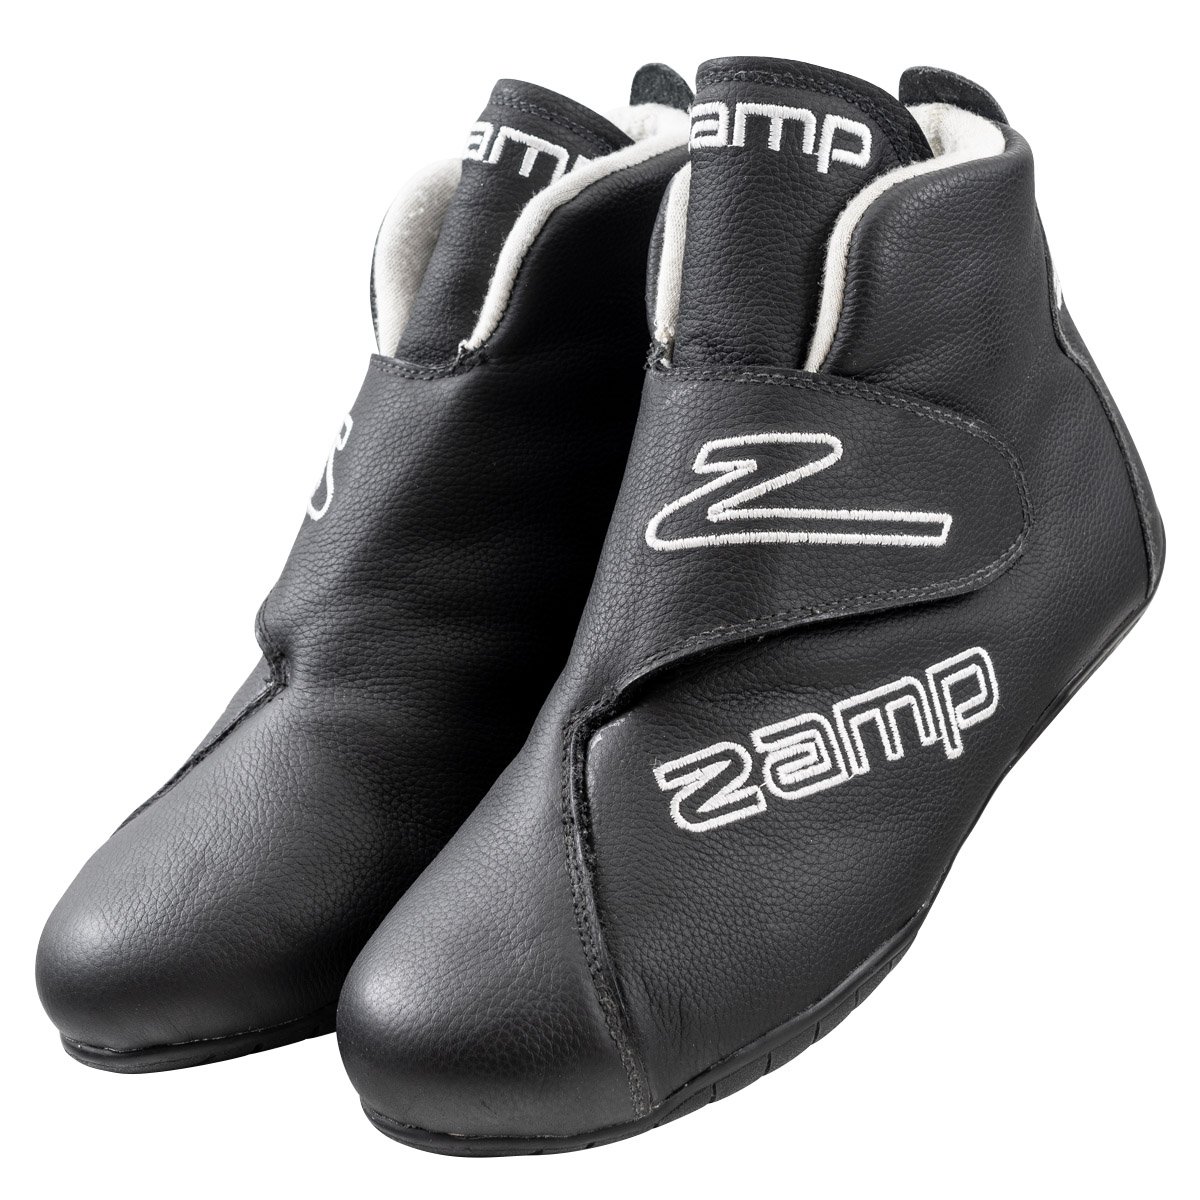 ZR-Drag SFI Shoe Black 15